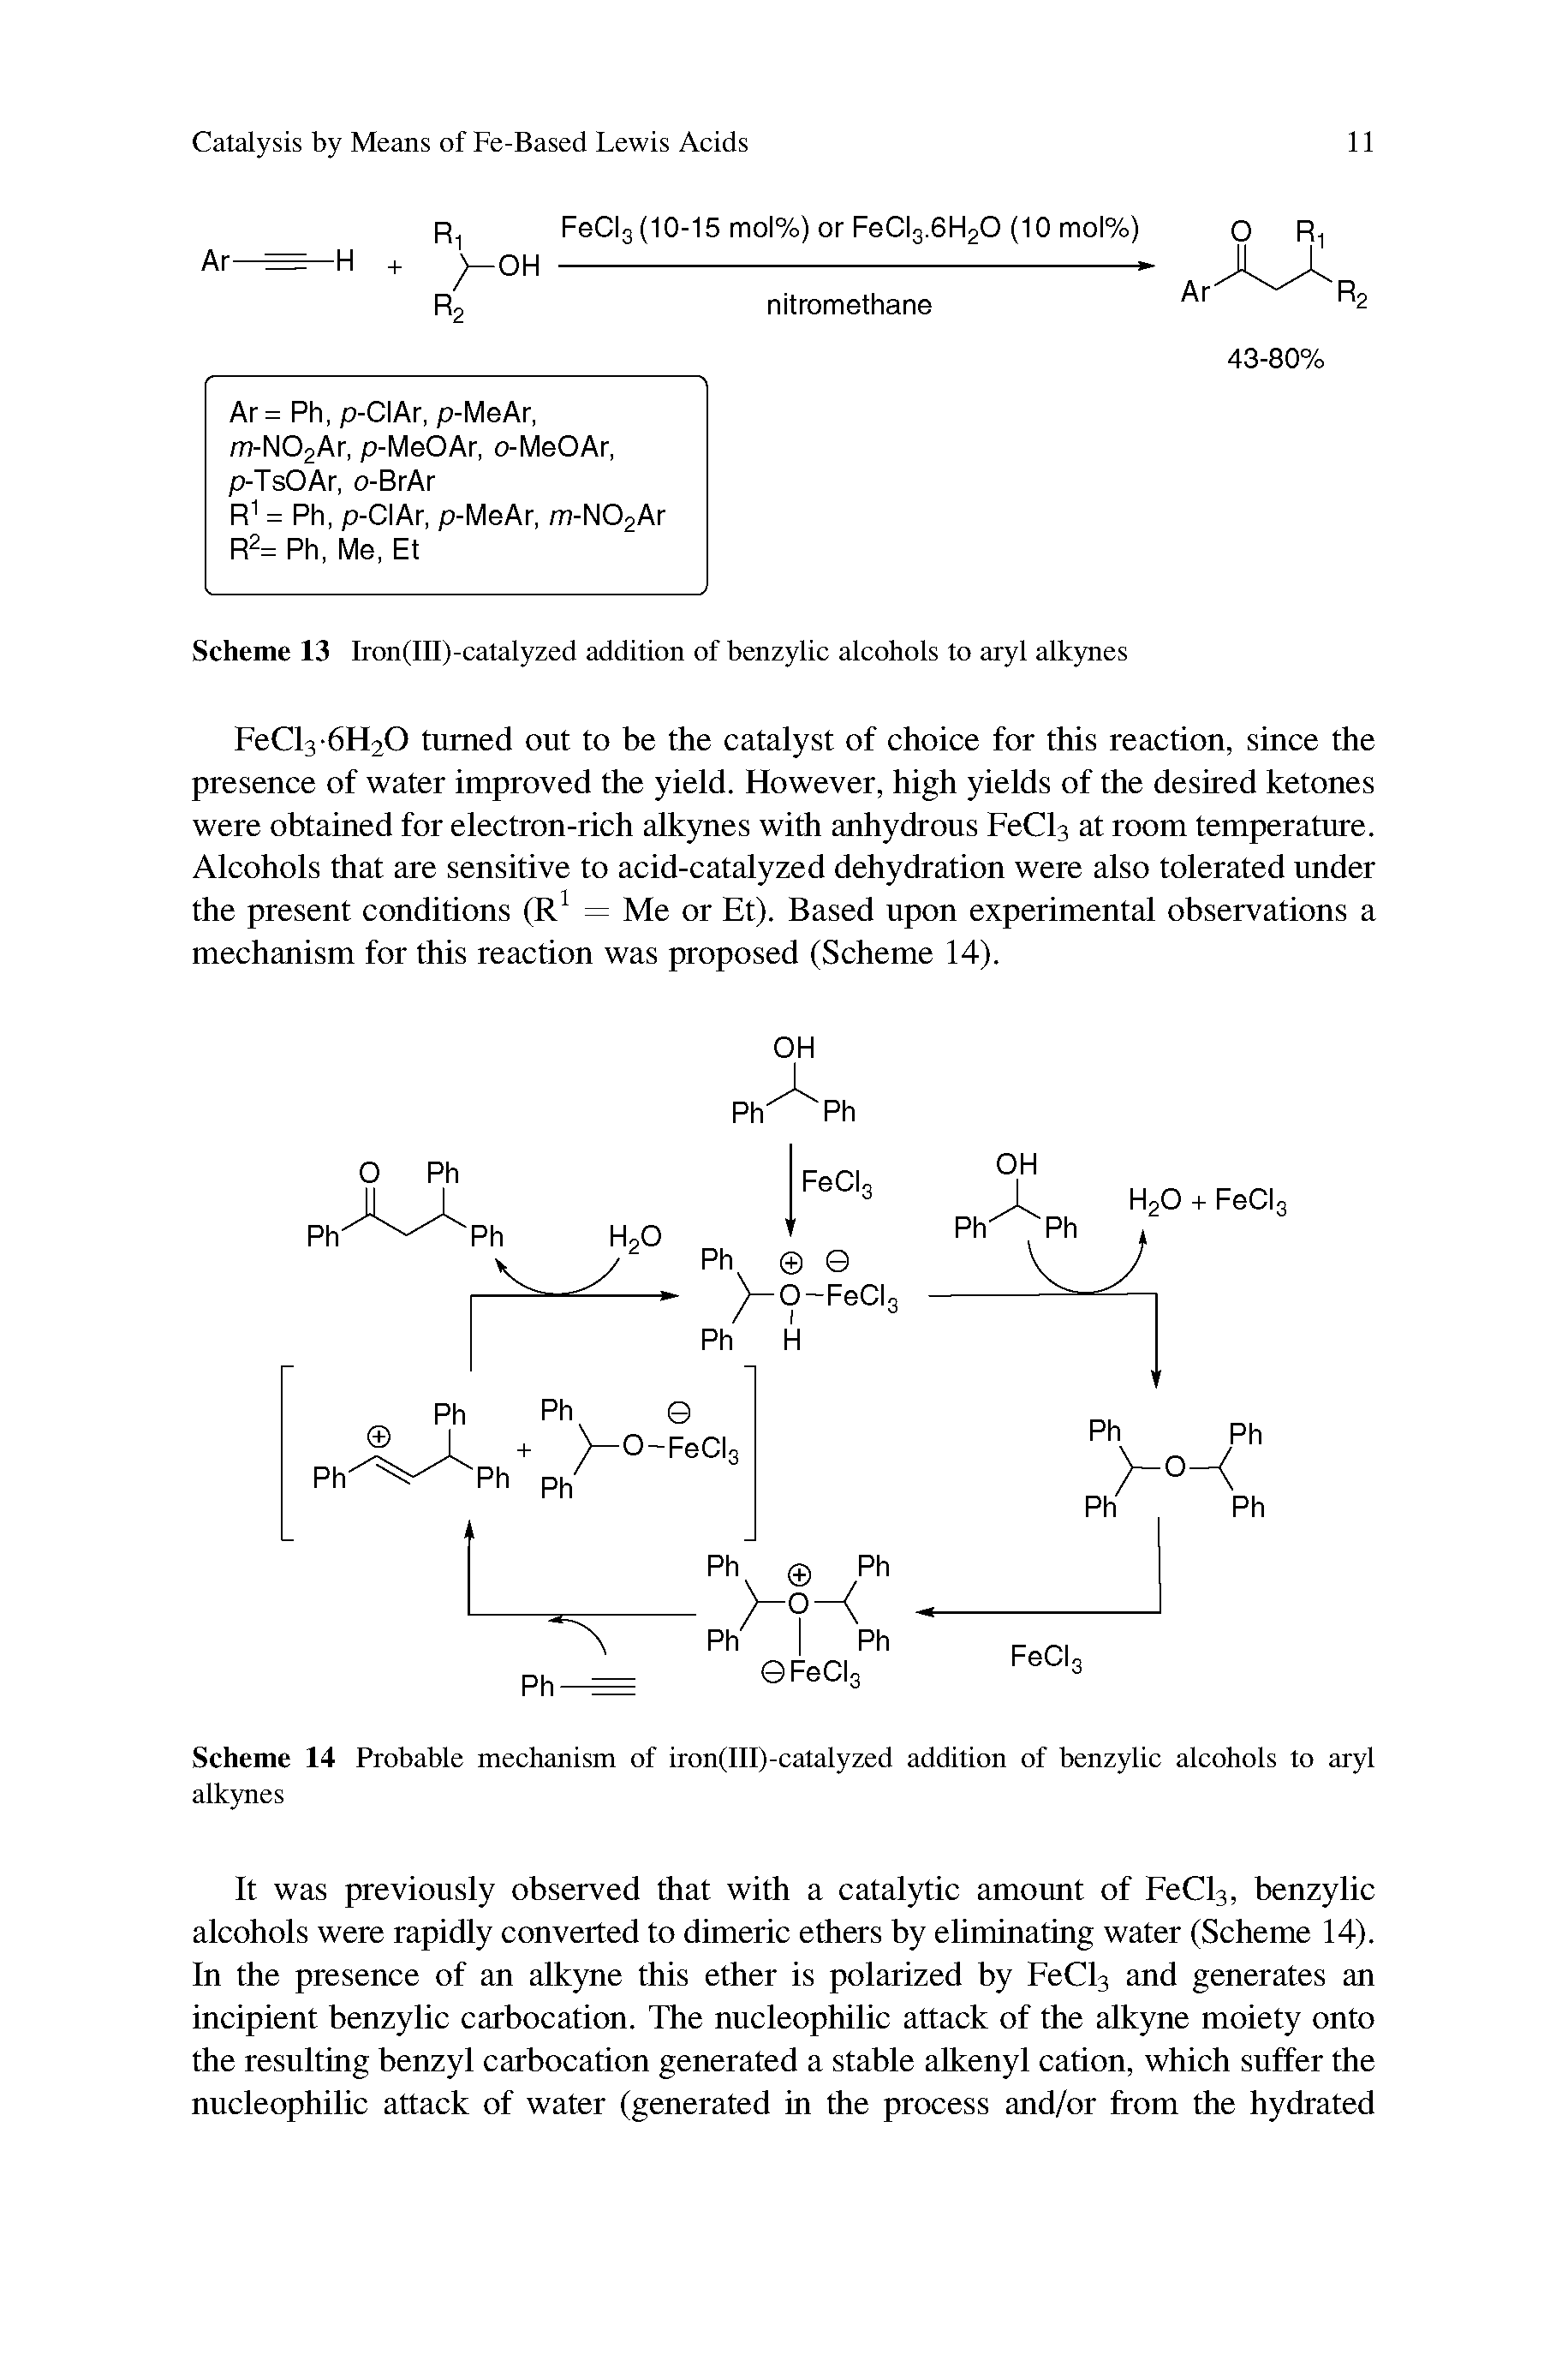 Scheme 13 Iron(III)-catalyzed addition of benzylic alcohols to aryl alkynes...